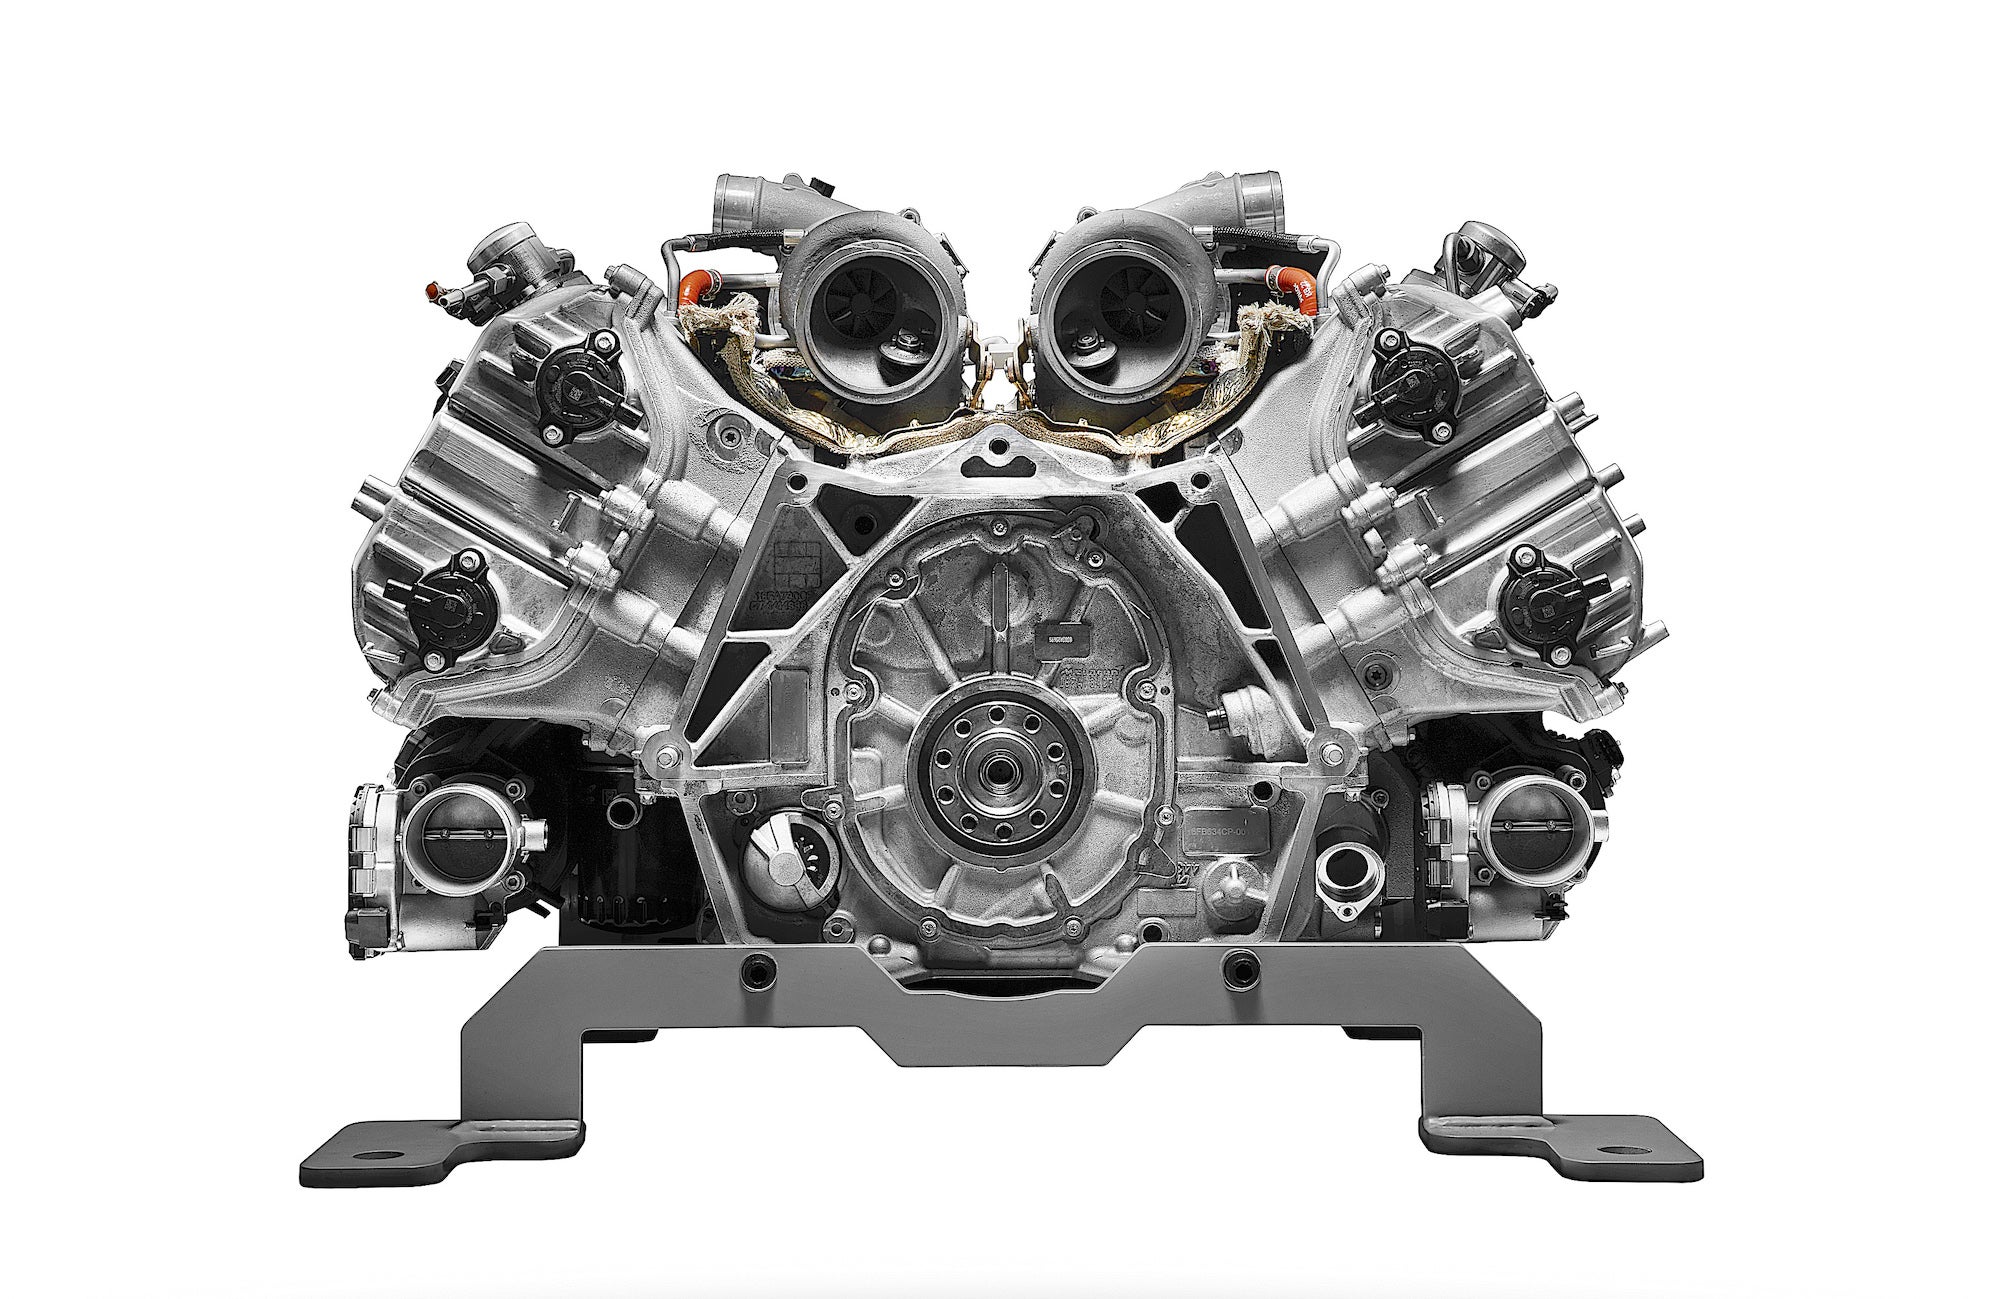 McLaren engine